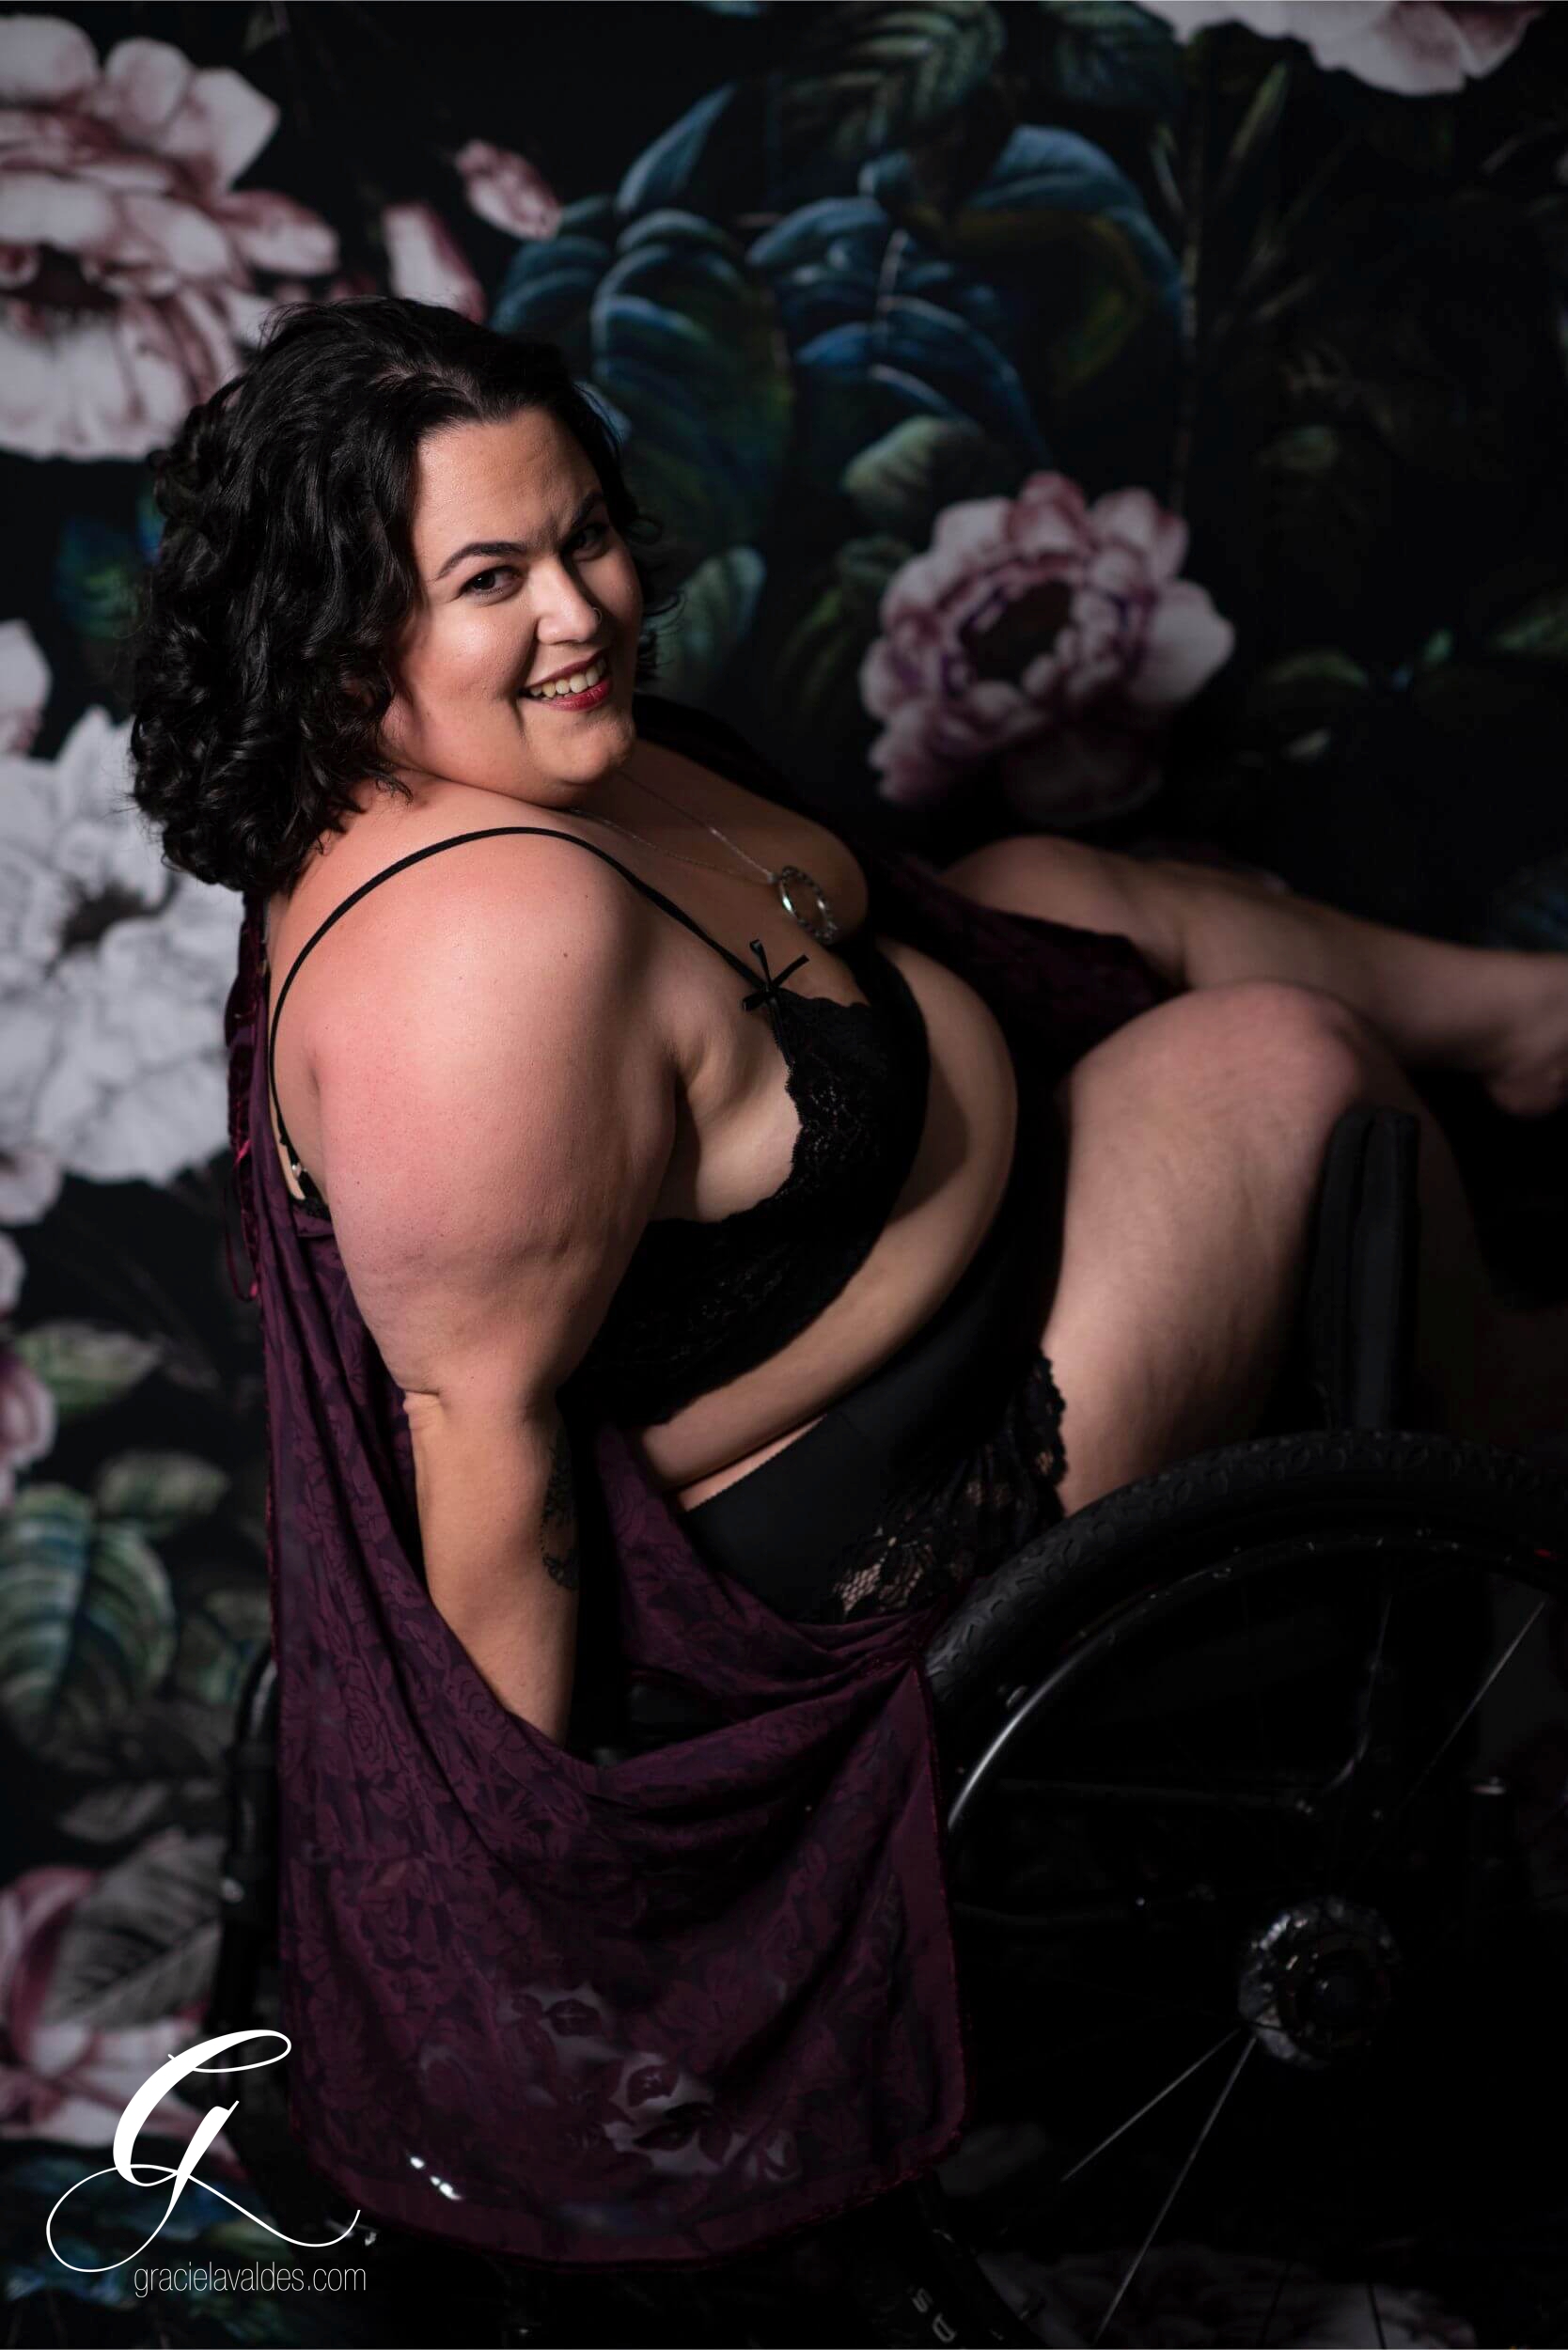 Genderqueer Boudoir Disabled Boudoir by Graciela Valdes 2.jpg